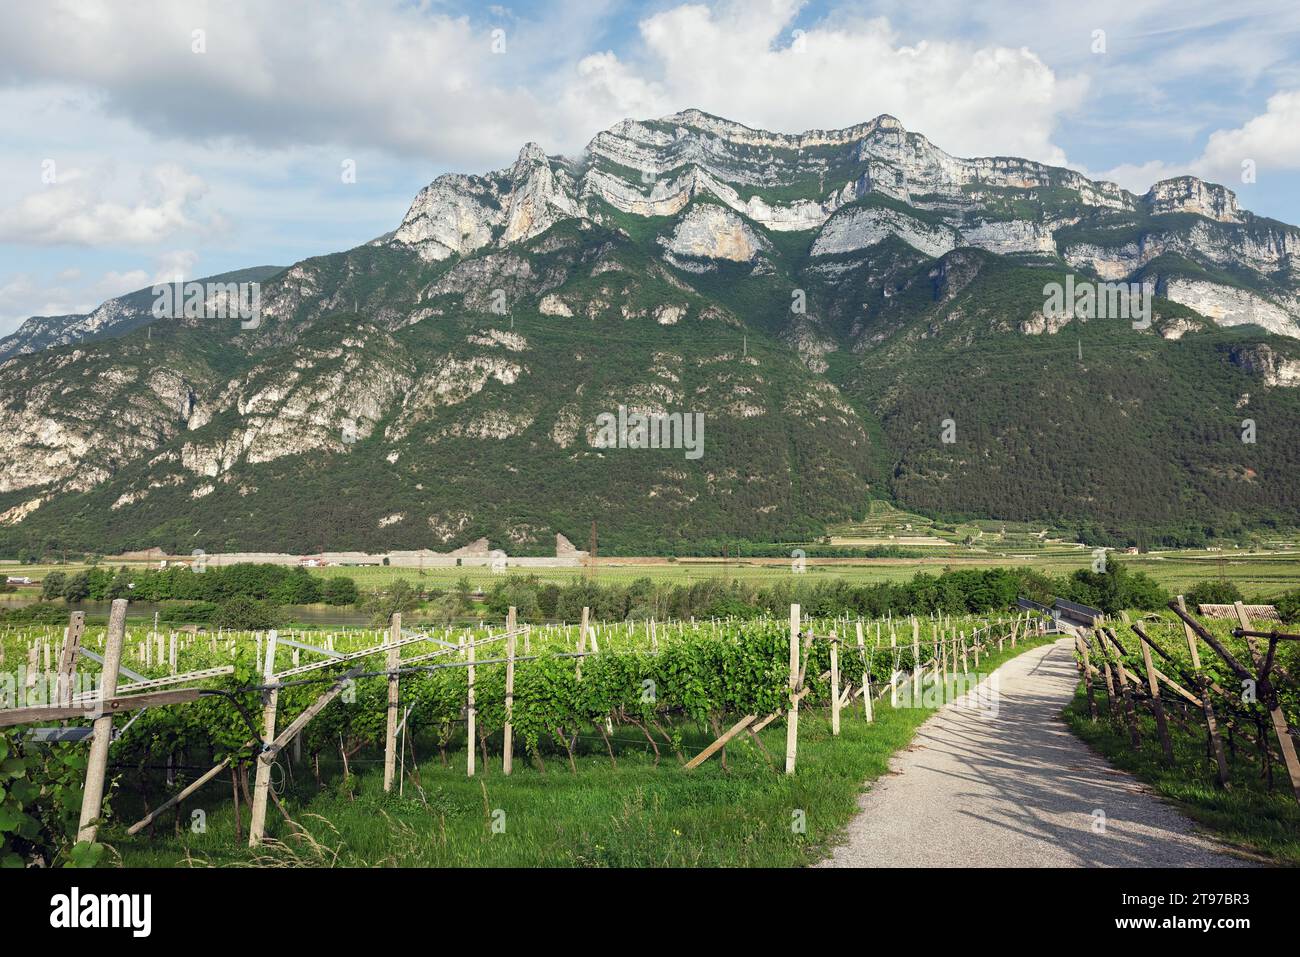 mountain vineyards in the Trento region, northern Italy Stock Photo